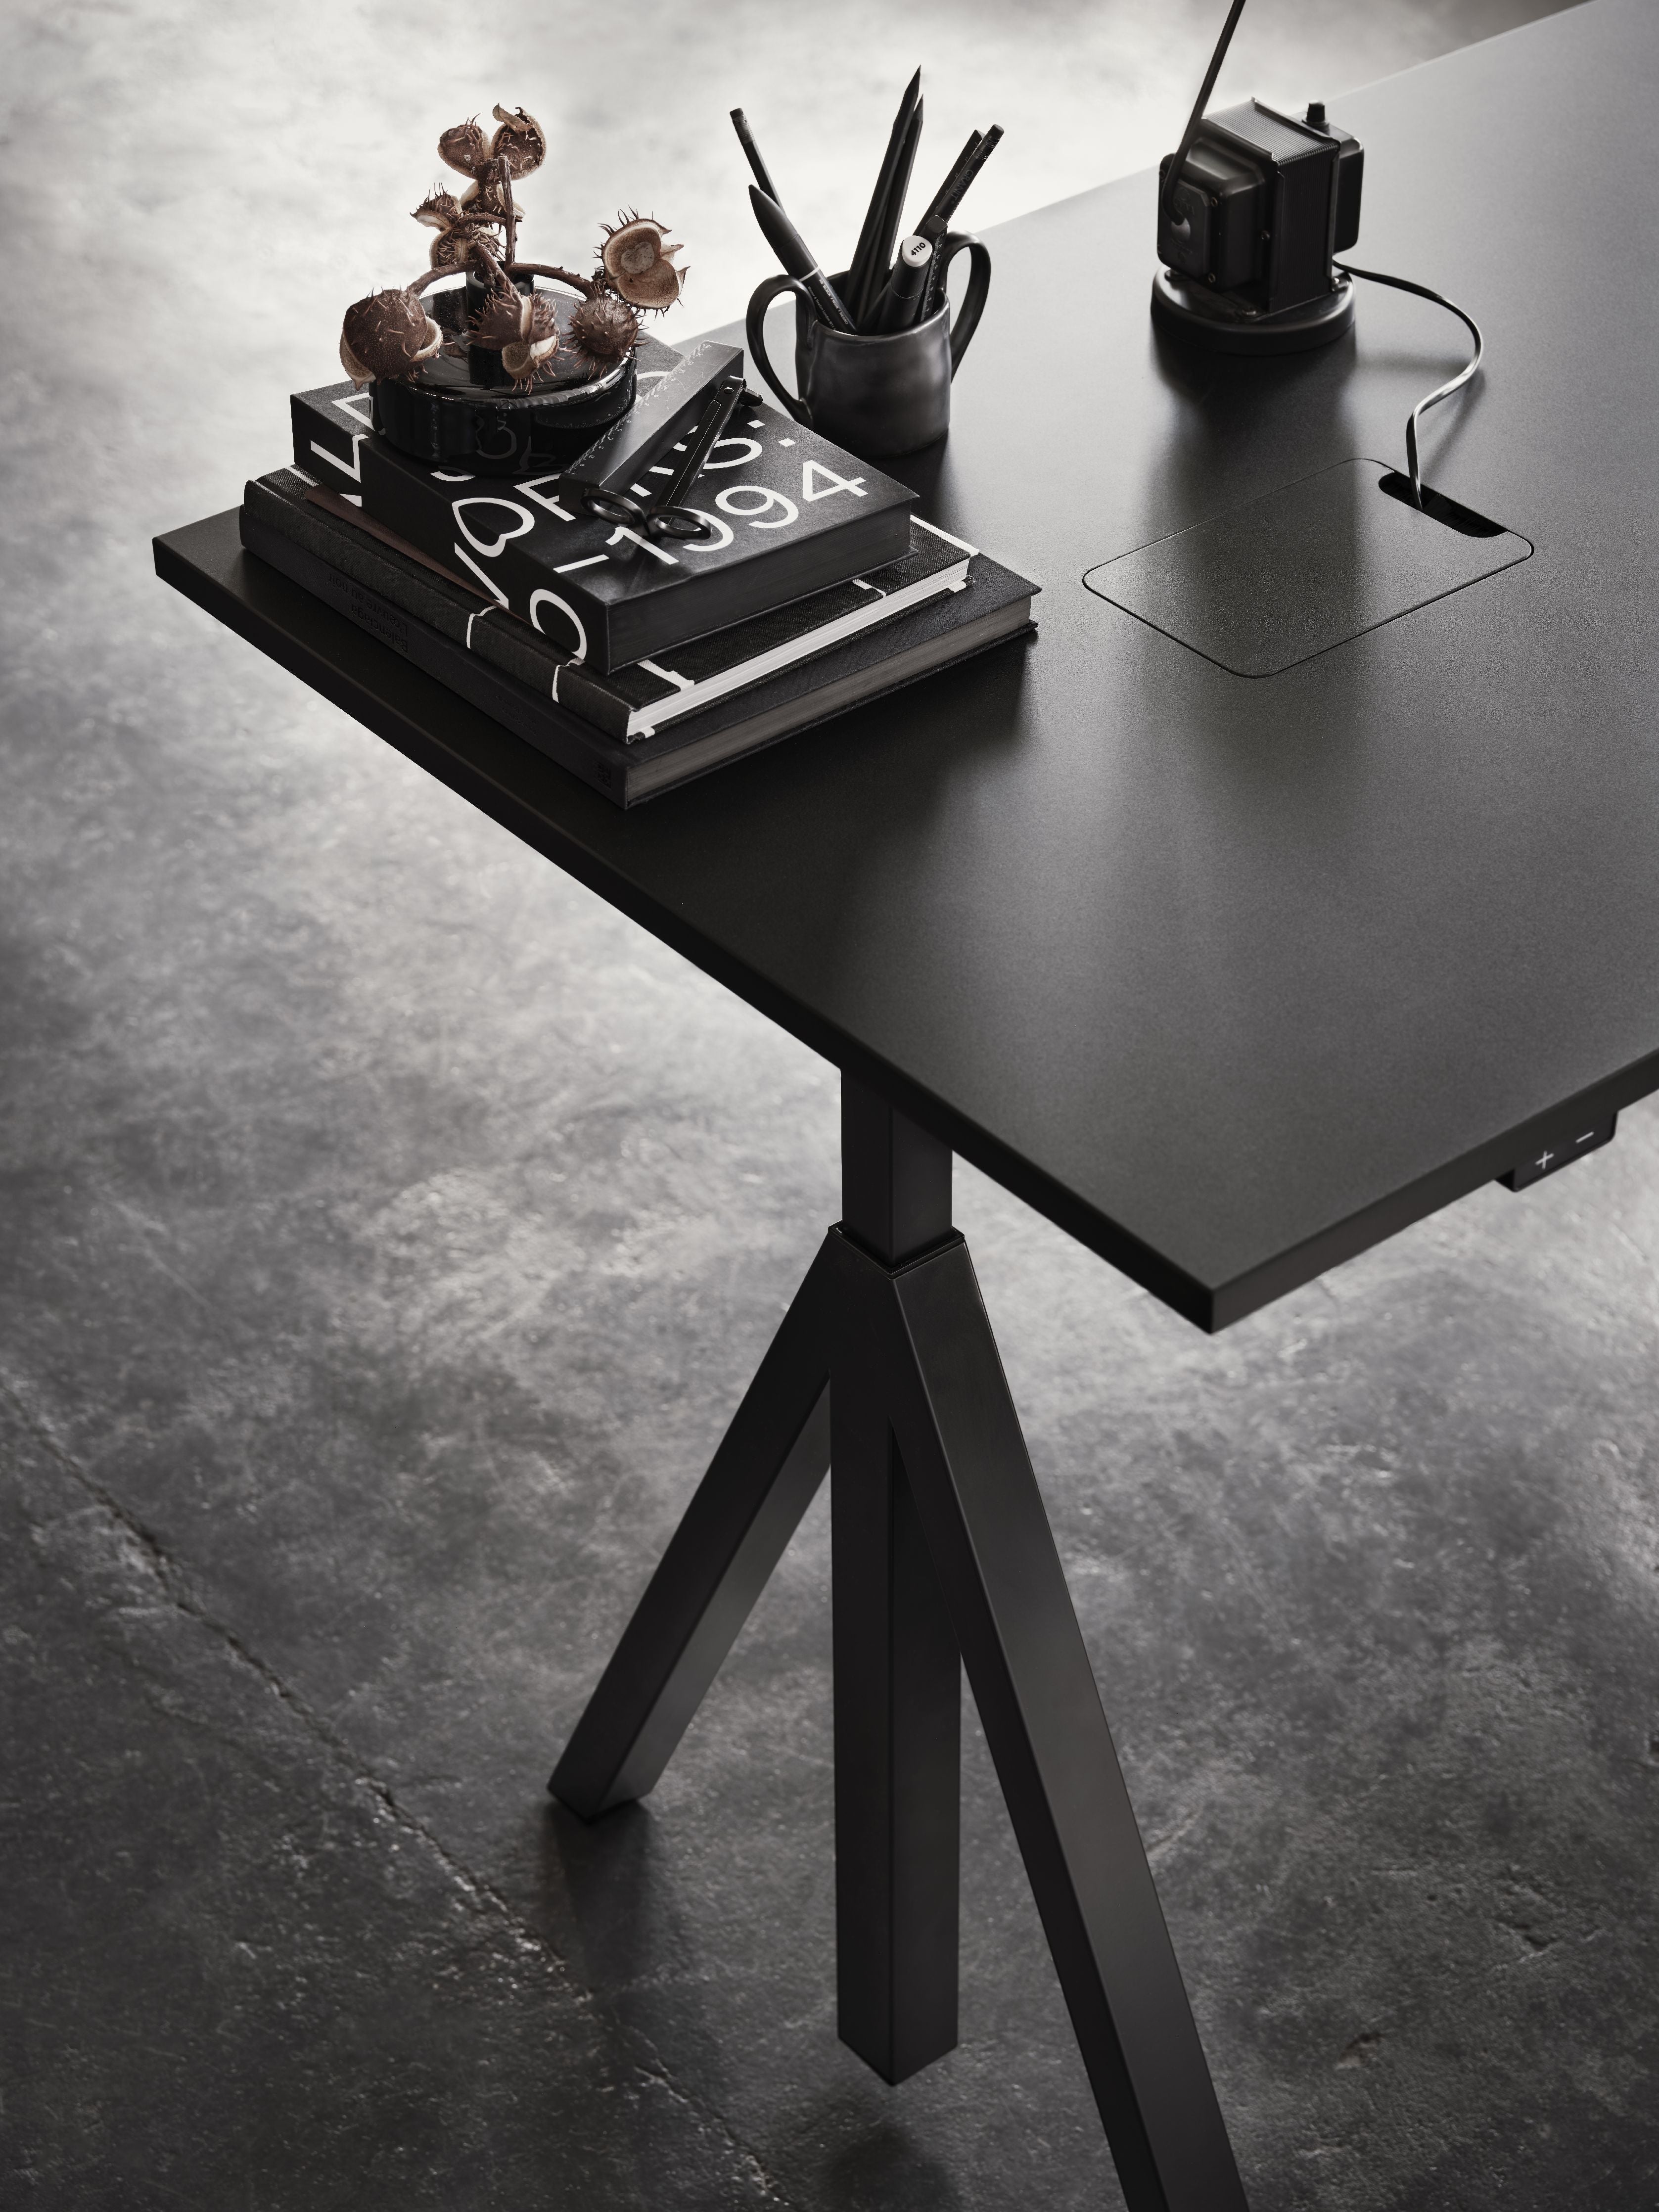 String Furniture Height Adjustable Conference Table 90x180 Cm, Oak/Black